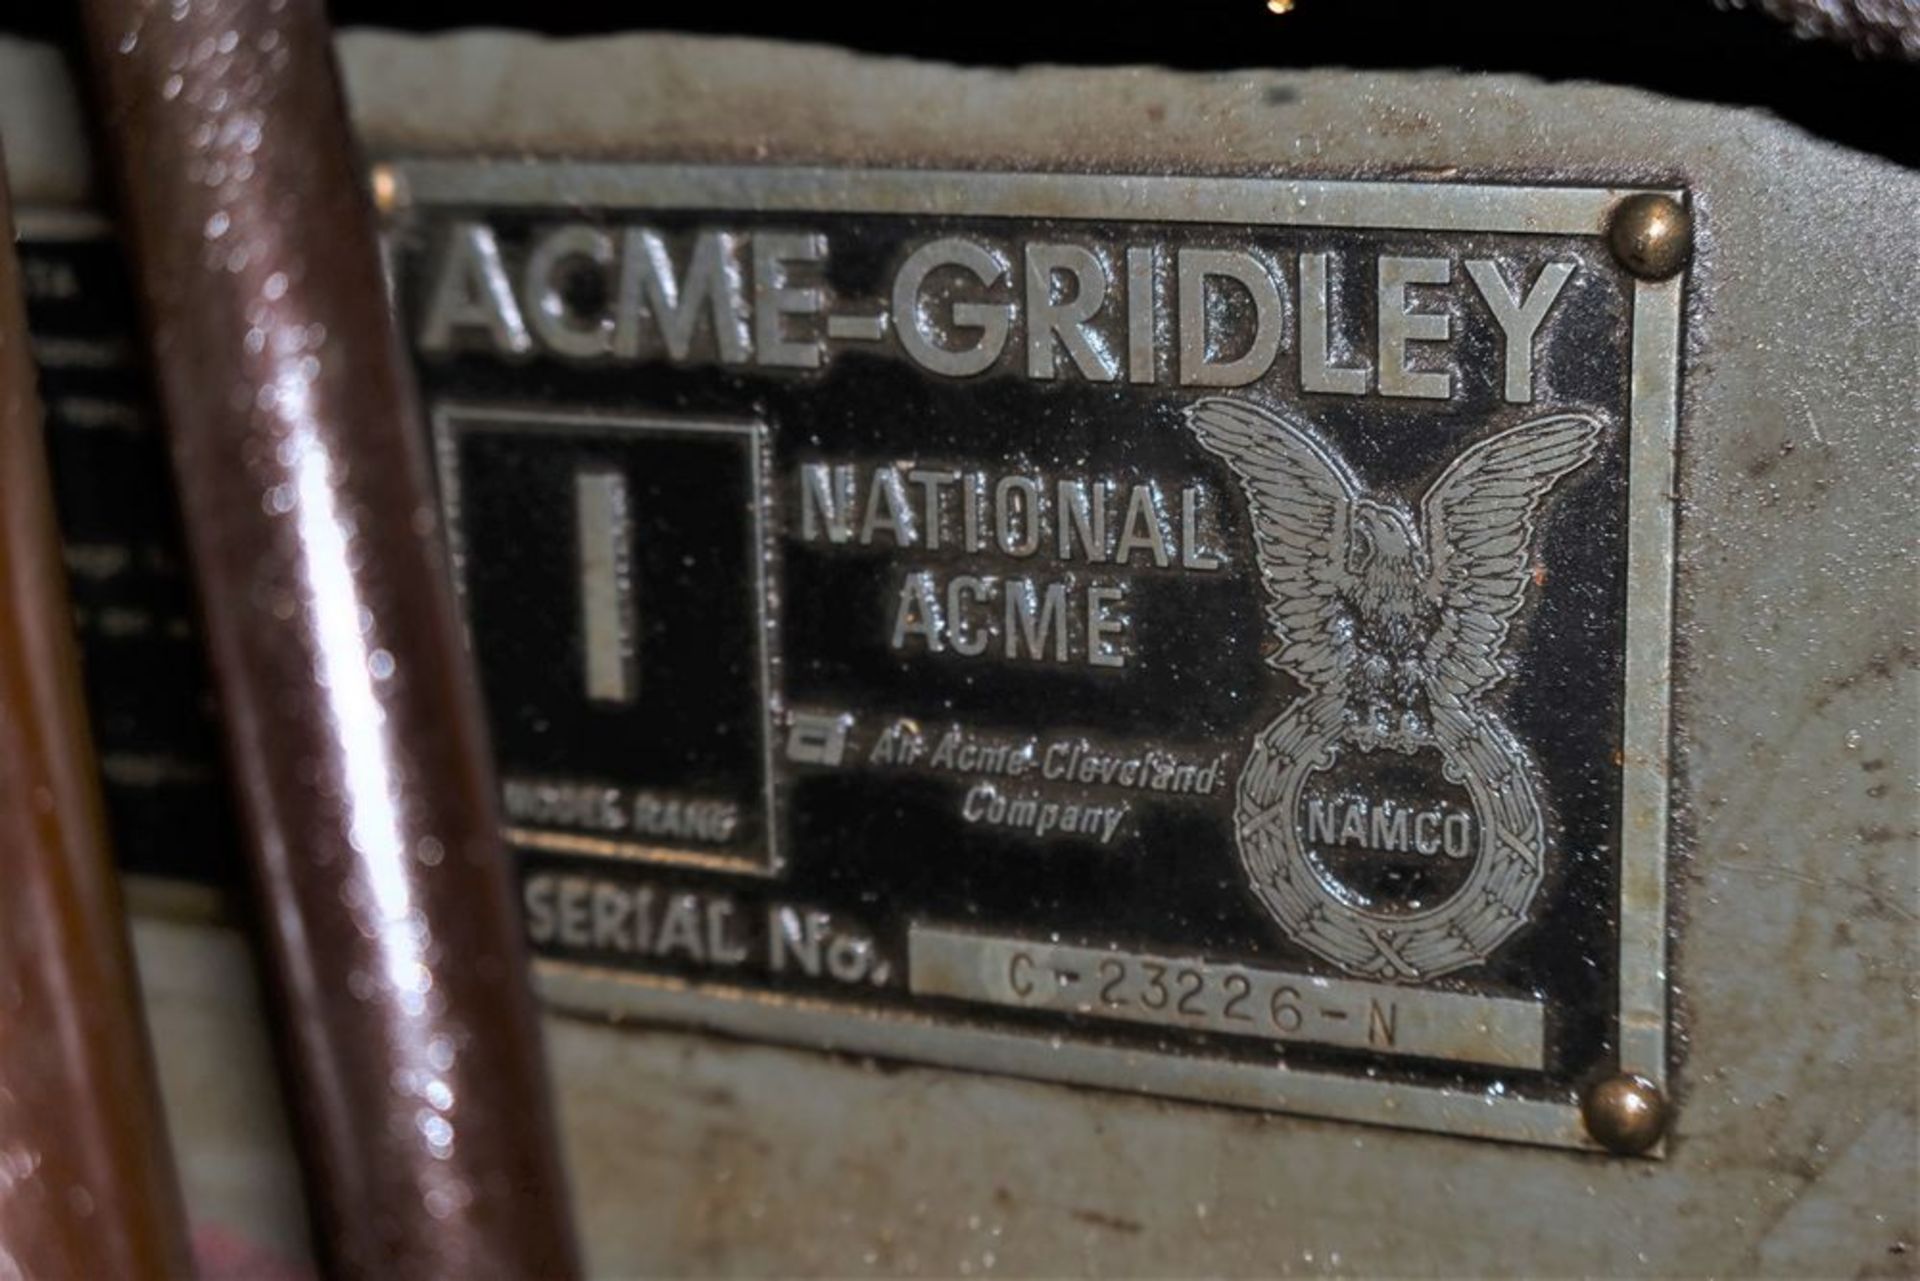 ACME GRIDLEY 1" SCREW MACHINE, S/N C23226-N (MACHINE #18) - Image 9 of 10